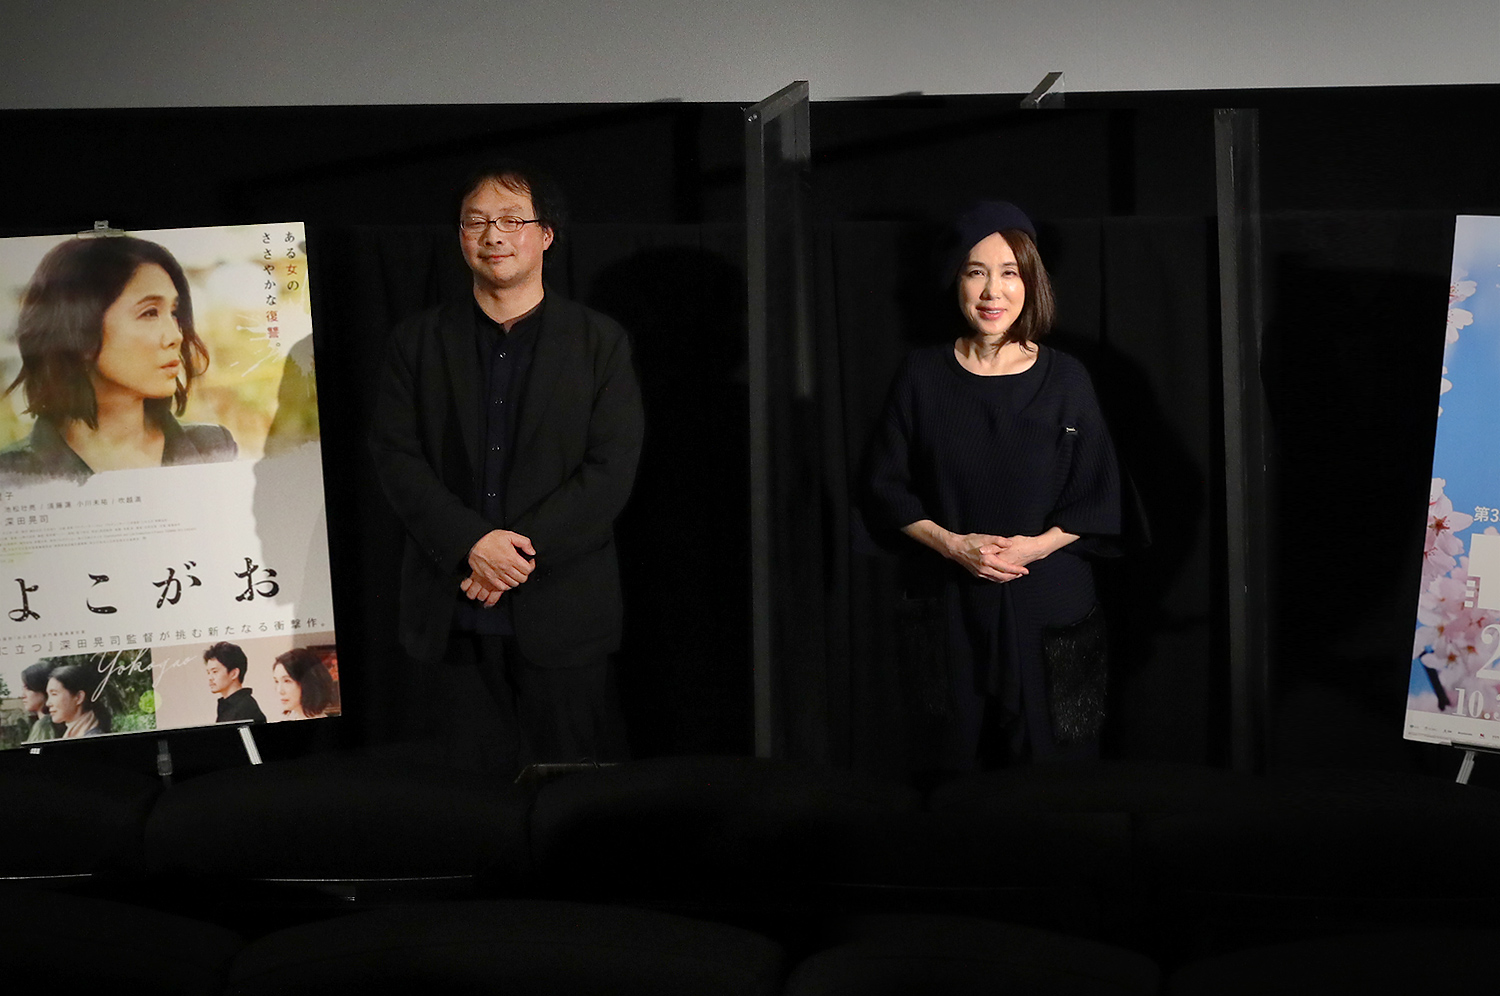 Girl Missing (QA) Koji Fukada (Director), Mariko Tsutsui (Actress)